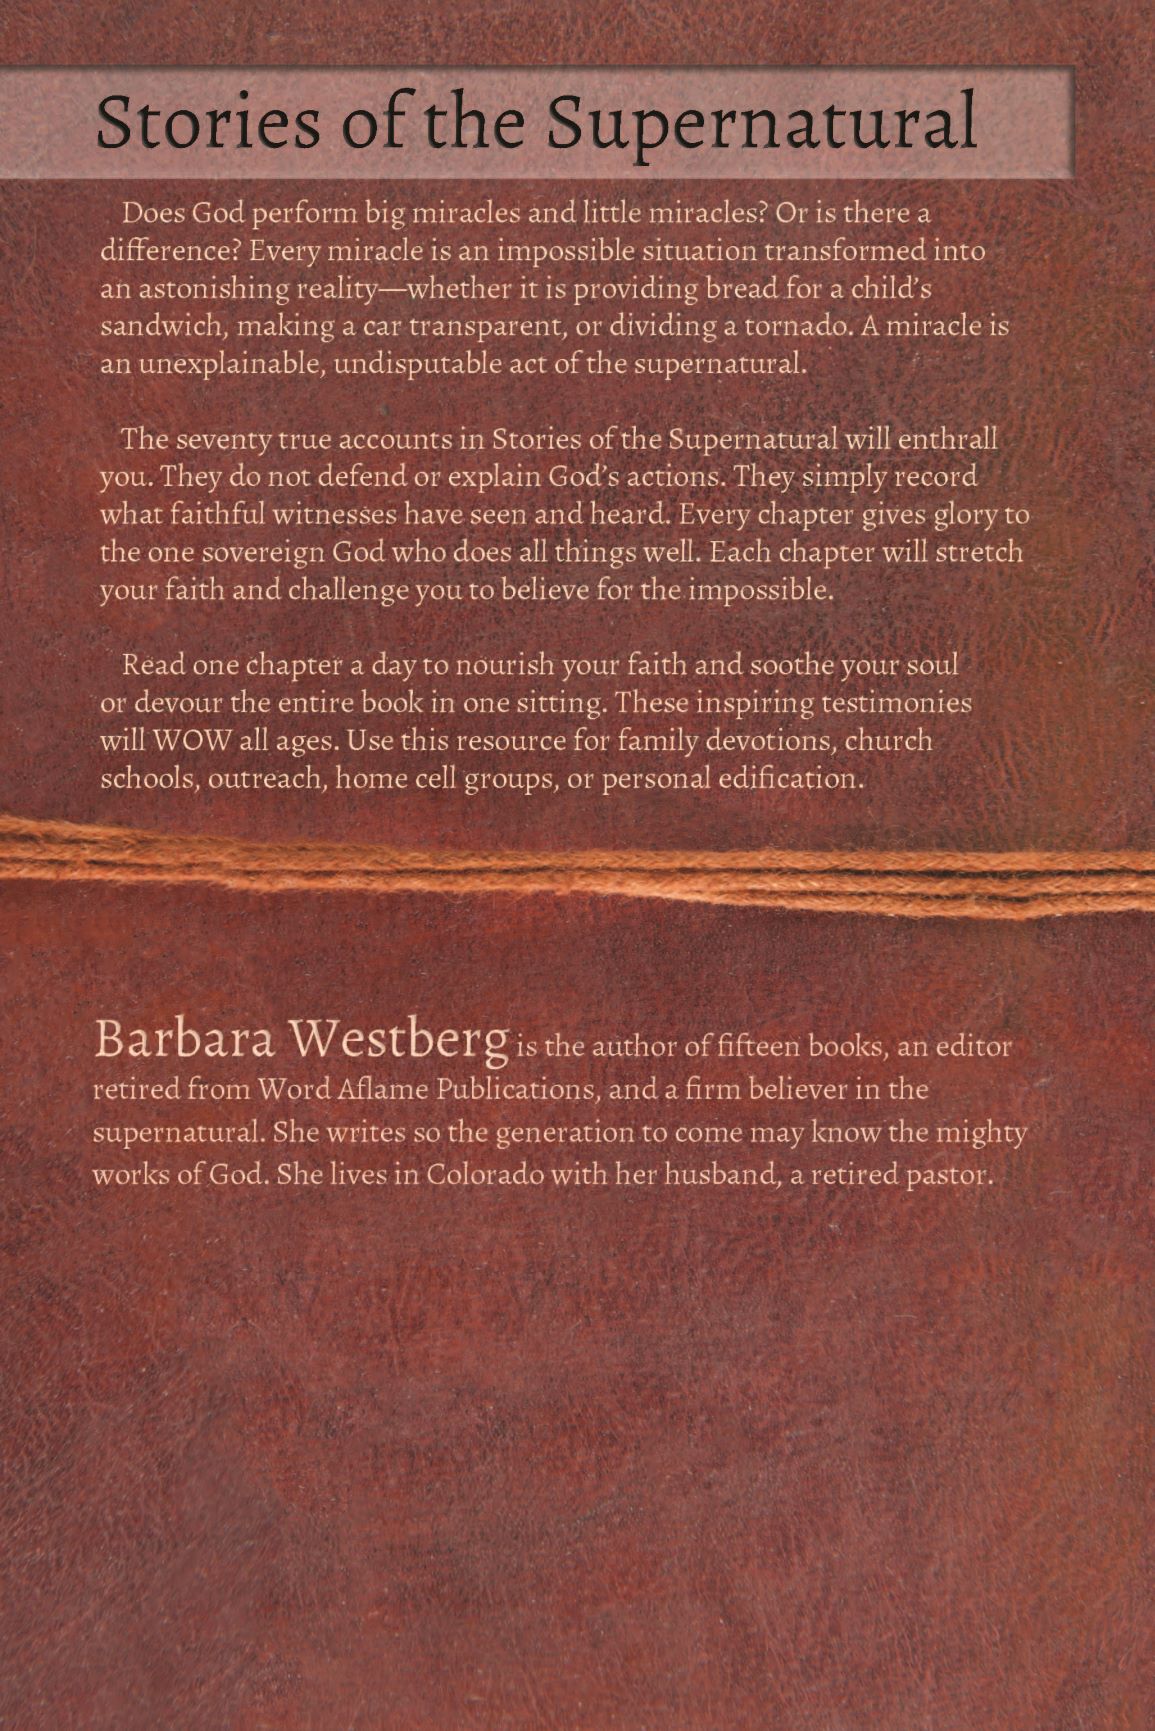 Stories of the Supernatural - Barbara Westberg